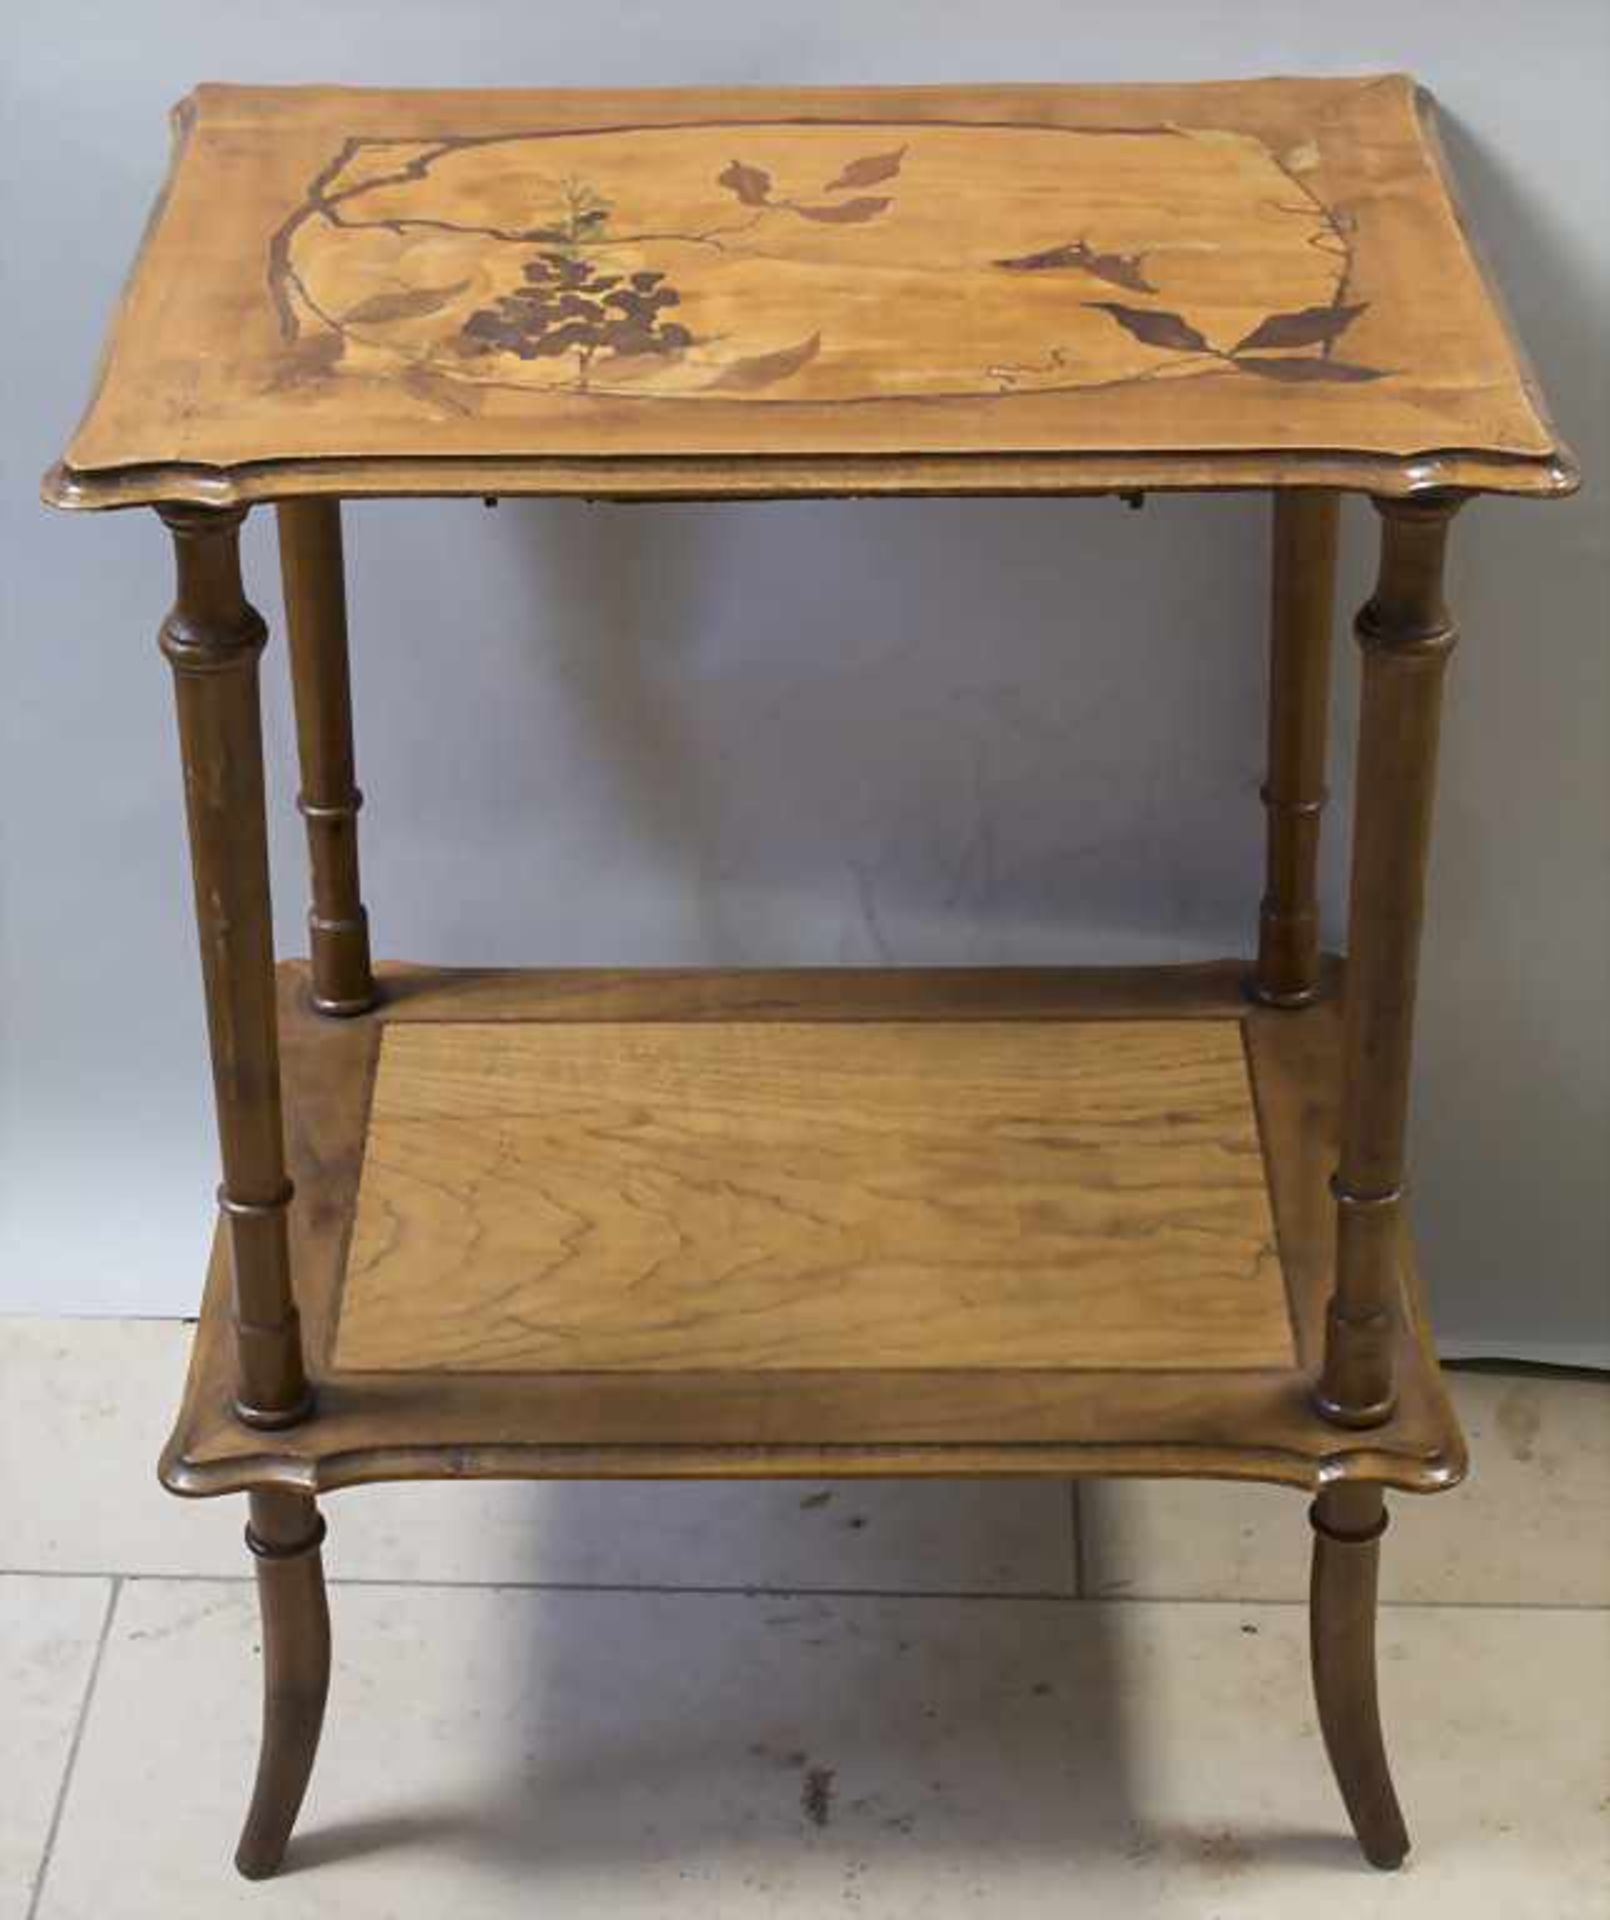 Jugendstil Beistelltisch mit Intarsien / An Art Nouveau table with a drawer and inlays, - Image 5 of 5